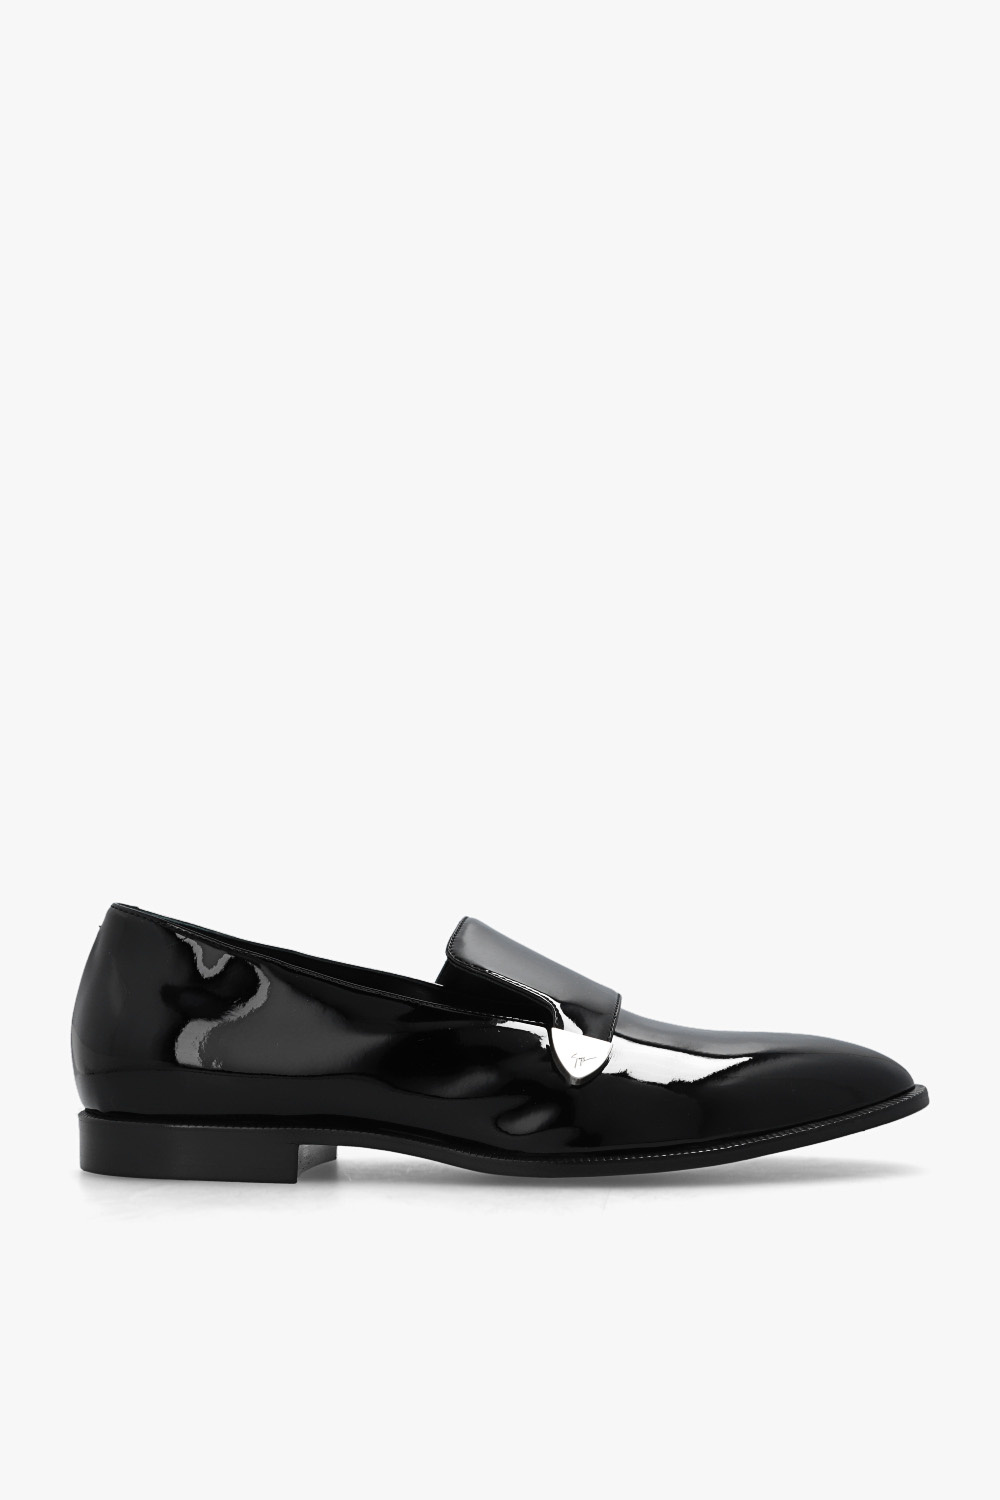 Giuseppe Zanotti ‘Flavio’ amp shoes